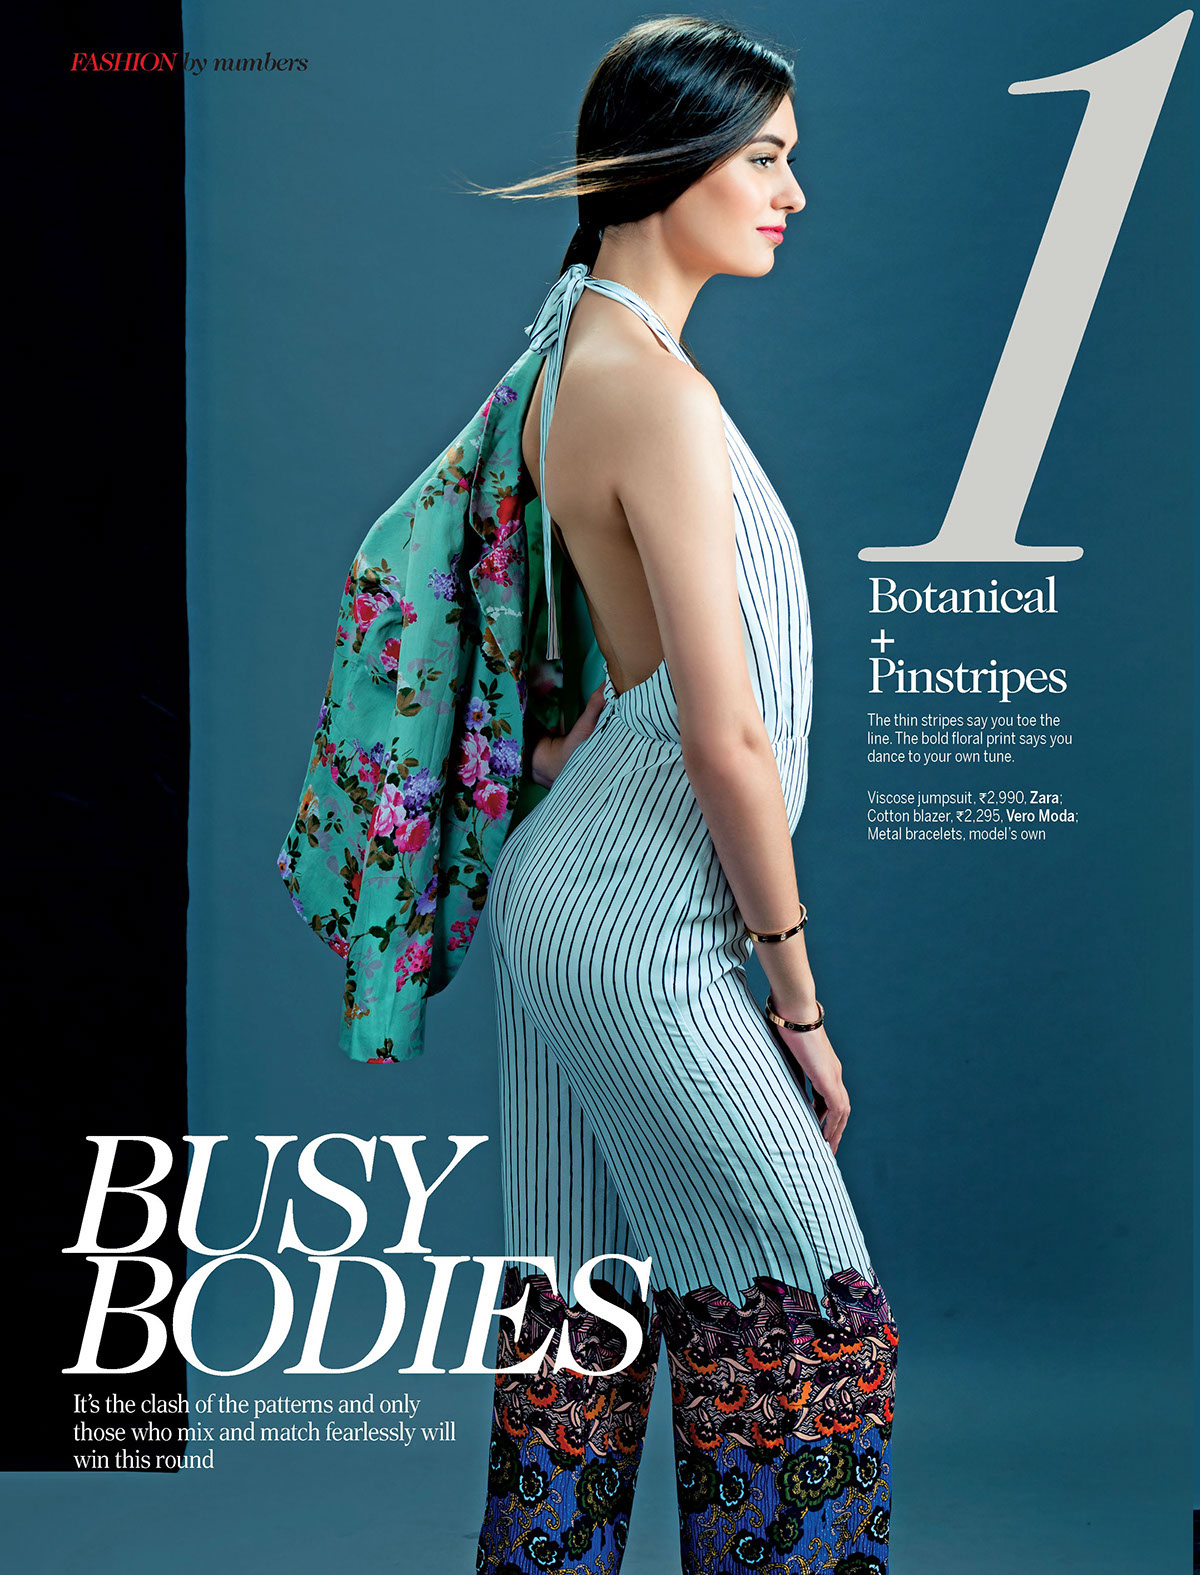 fashionbynumbers fashion editorial editorial magazine fashion styling Fashion 